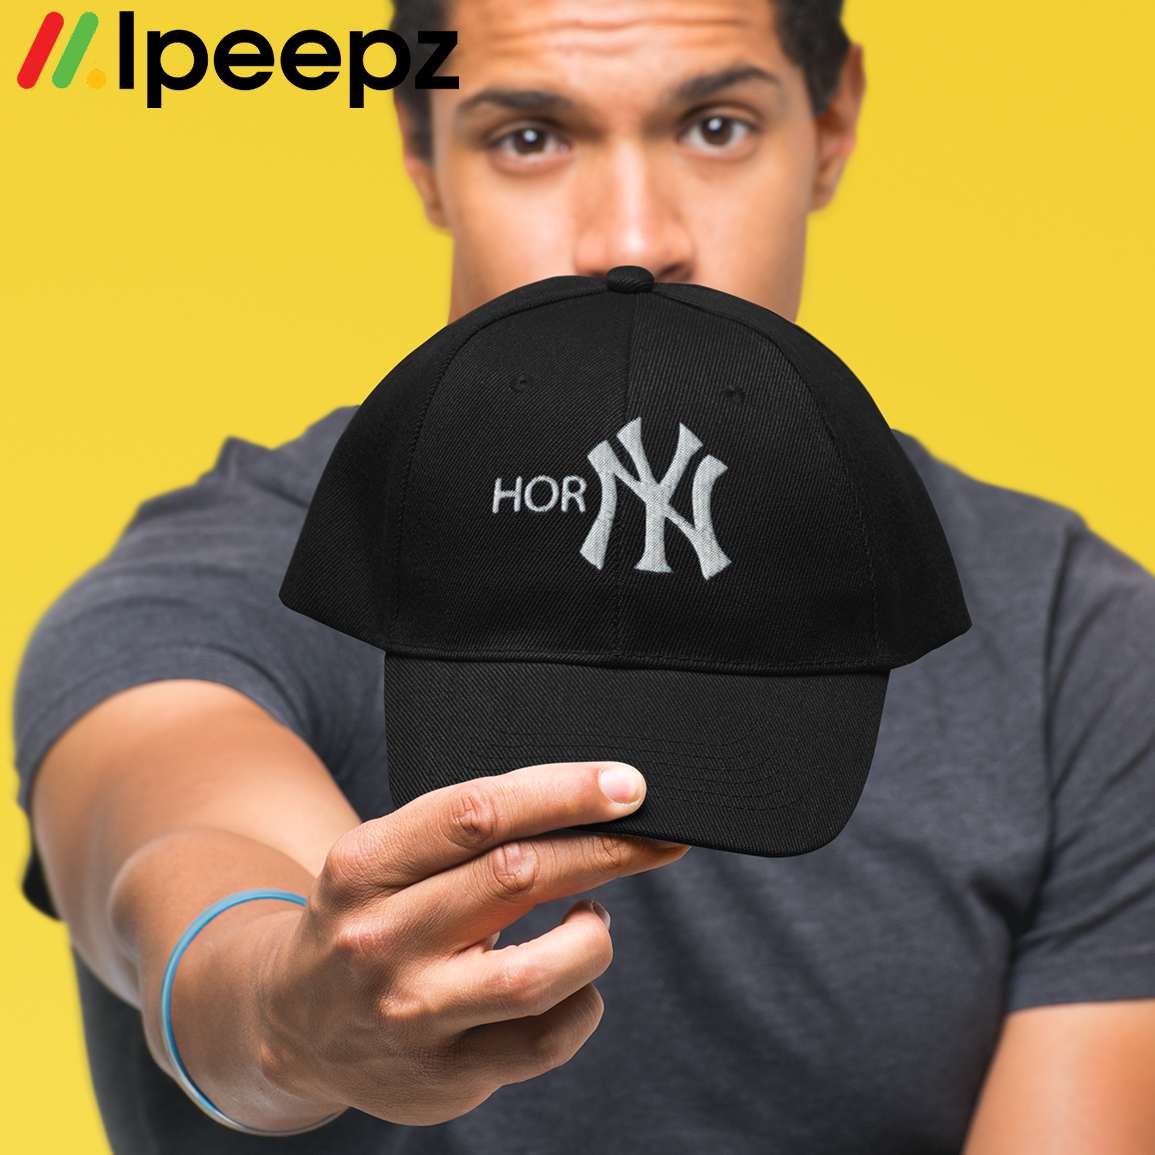 NY Yankees Snapback Hat - Original